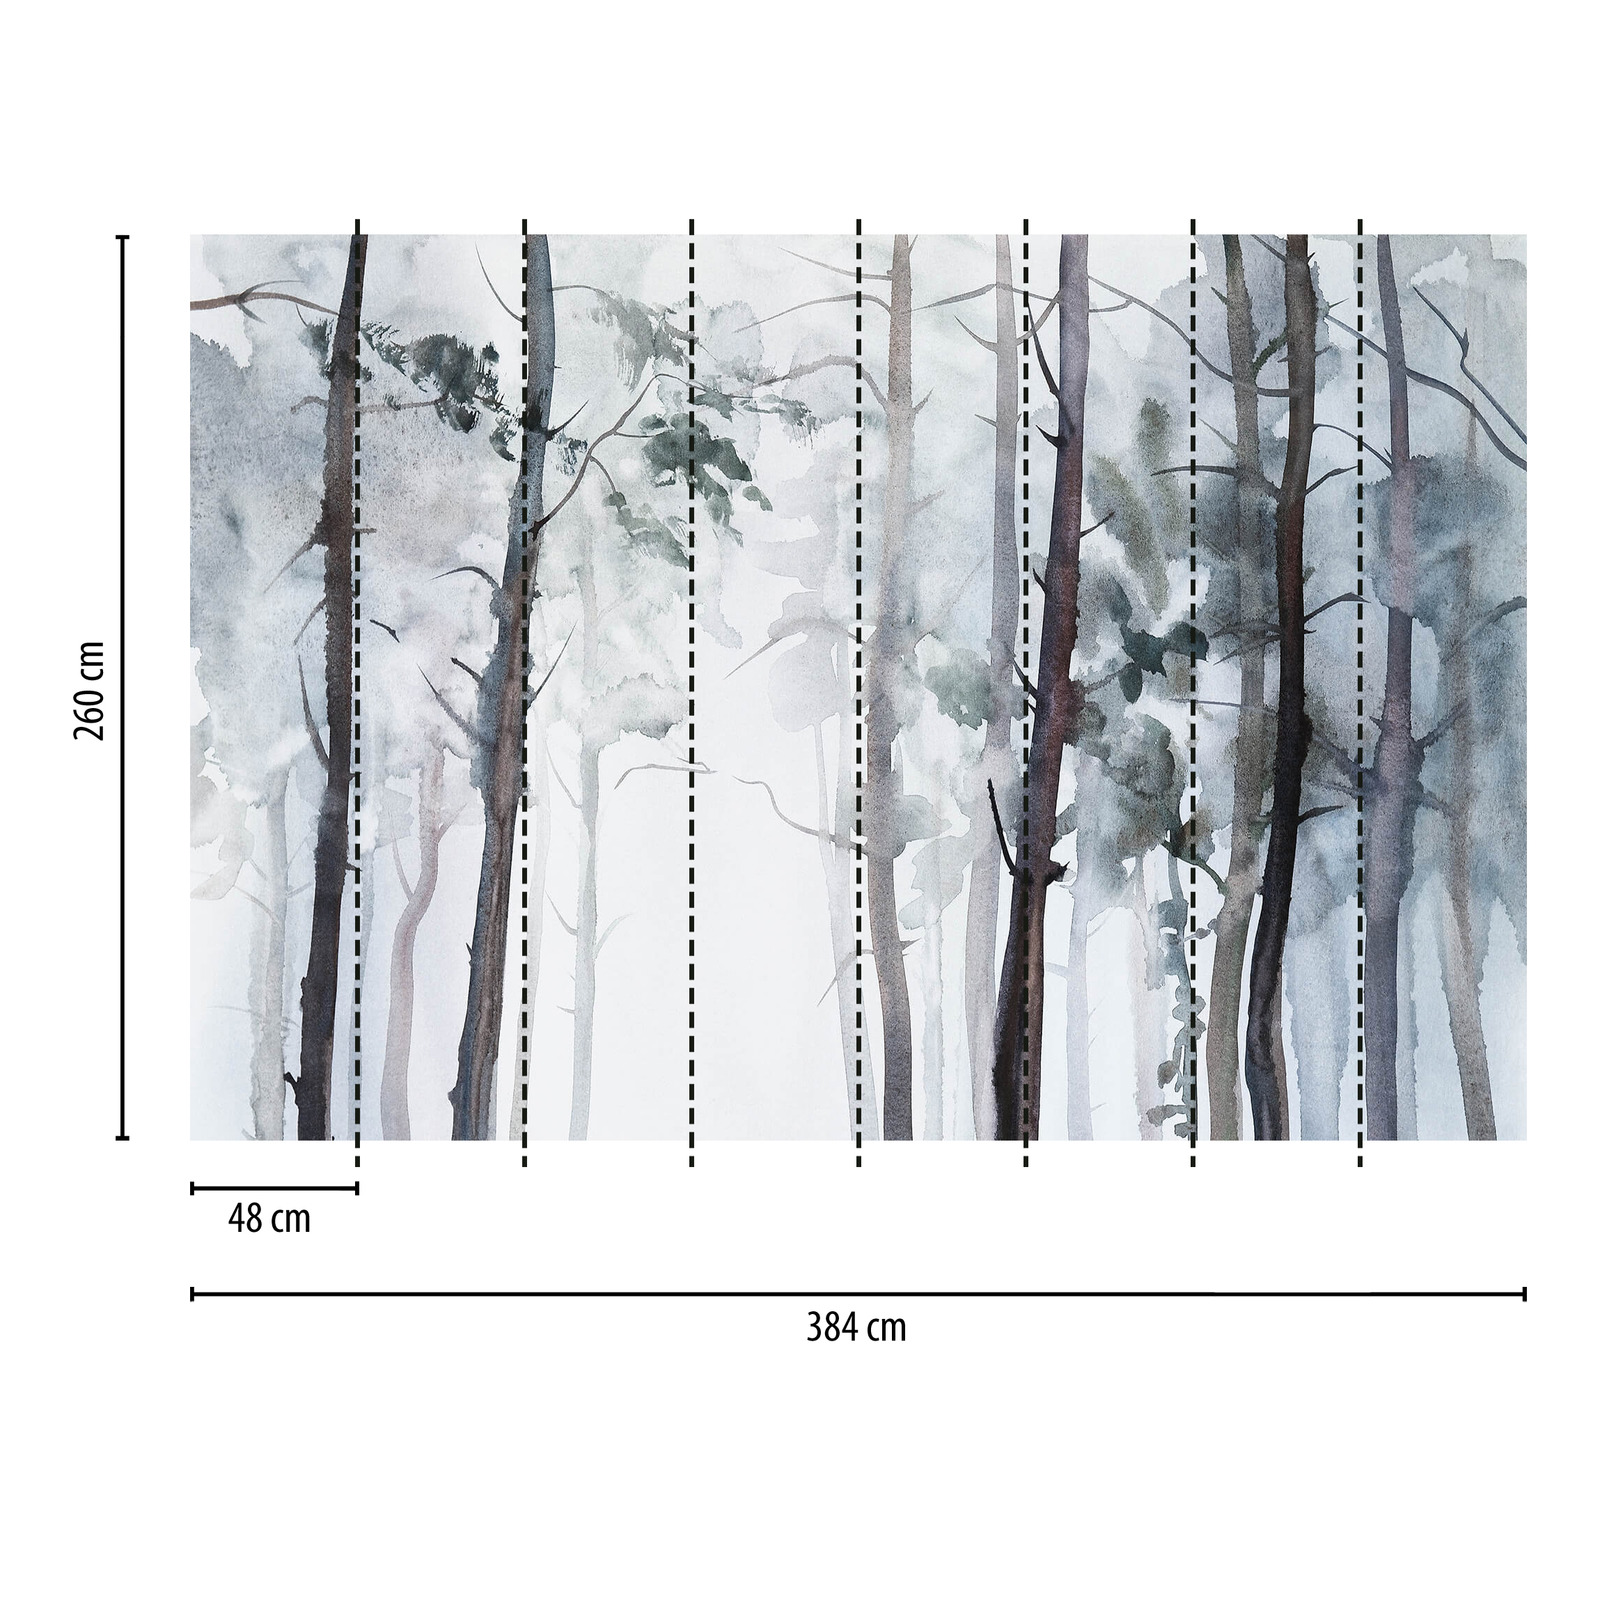             Fototapete nebeliger Wald – Blau, Grau, Weiß
        